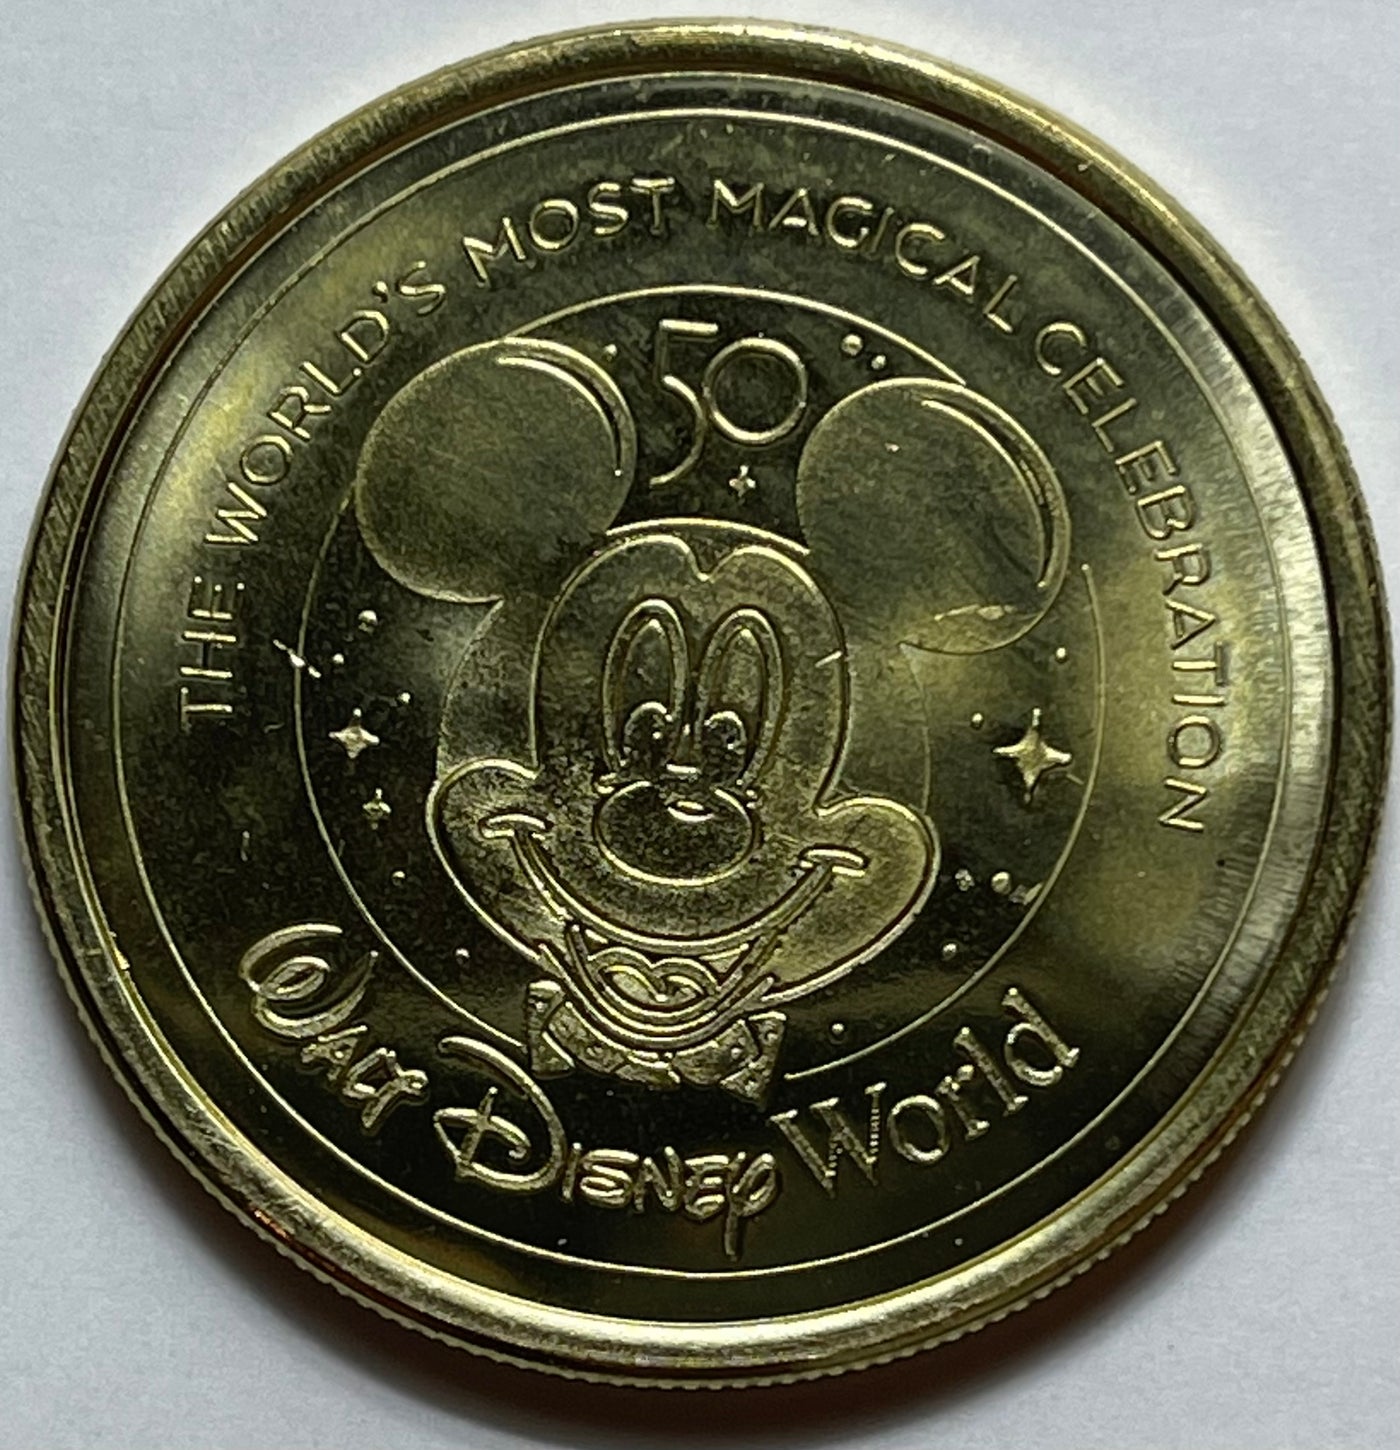 Disney Parks WDW 50th Magical Celebration Jiminy Cricket Coin Medallion New